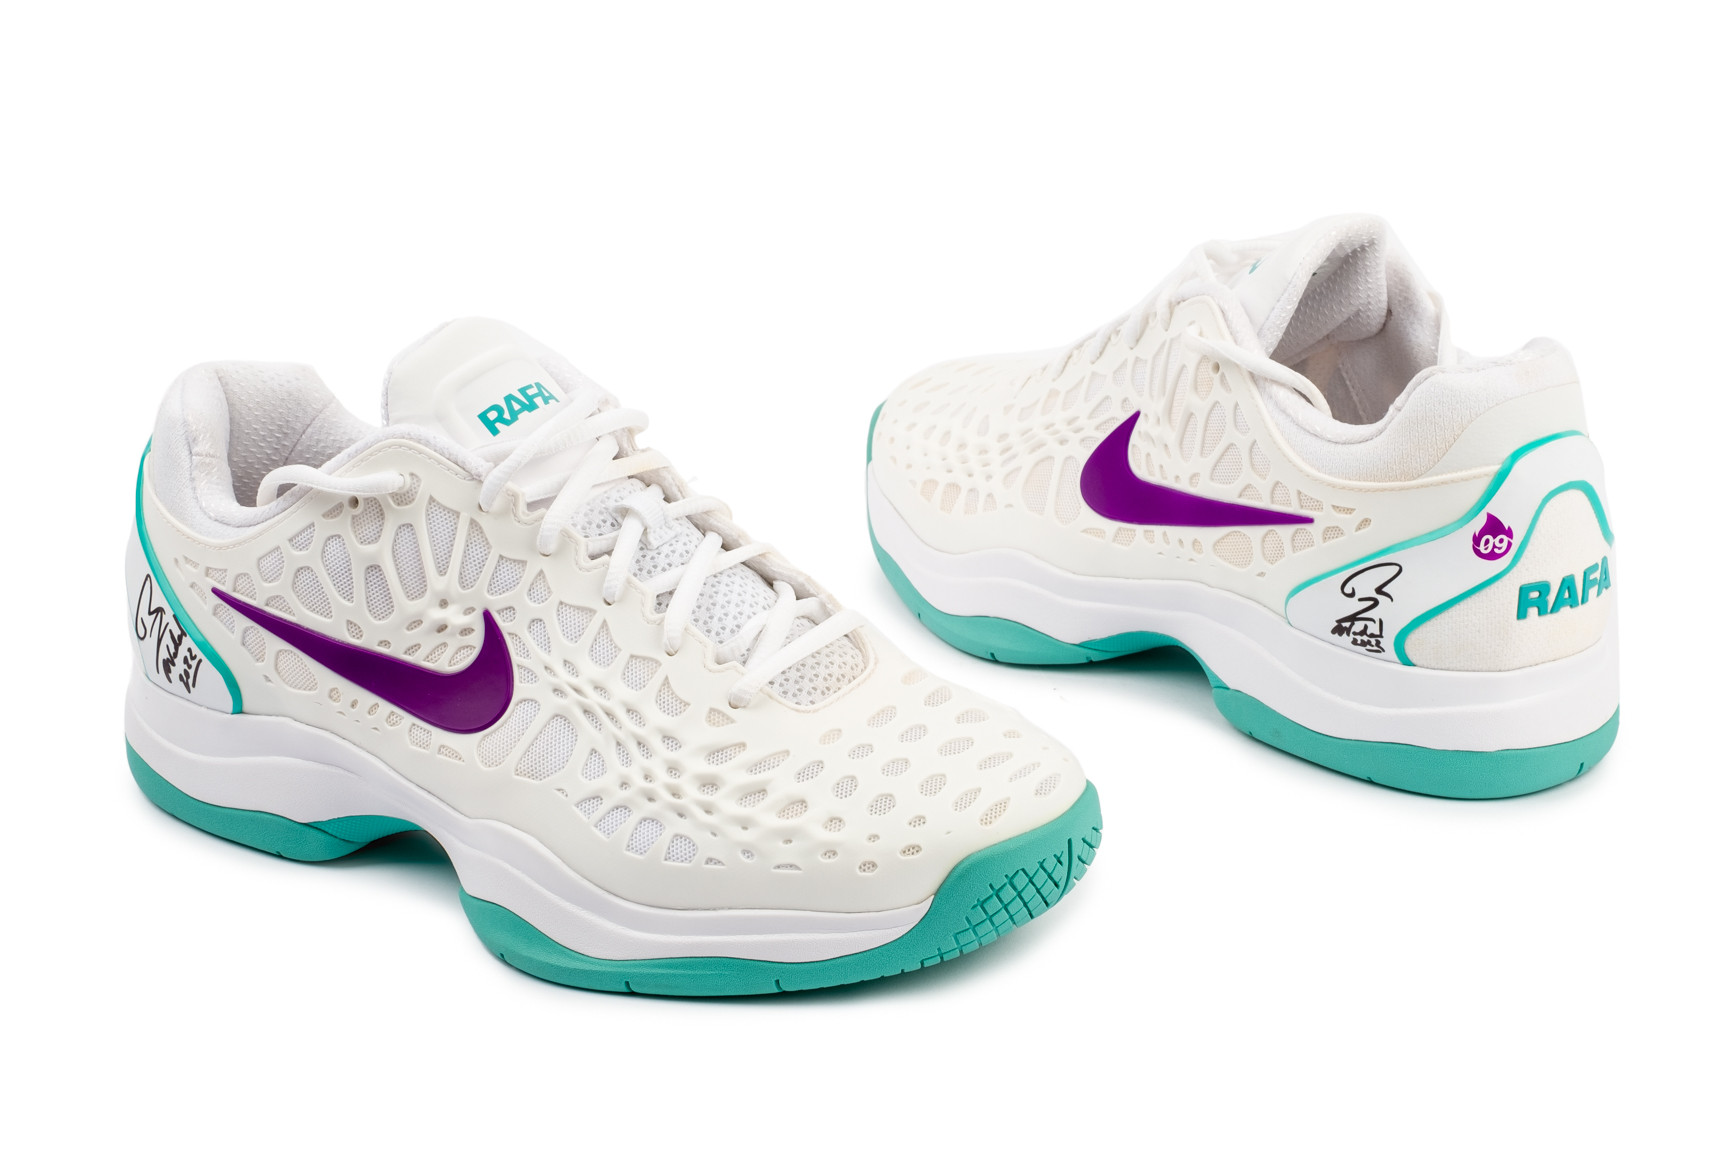 Zapatillas Nike por Rafa Nadal